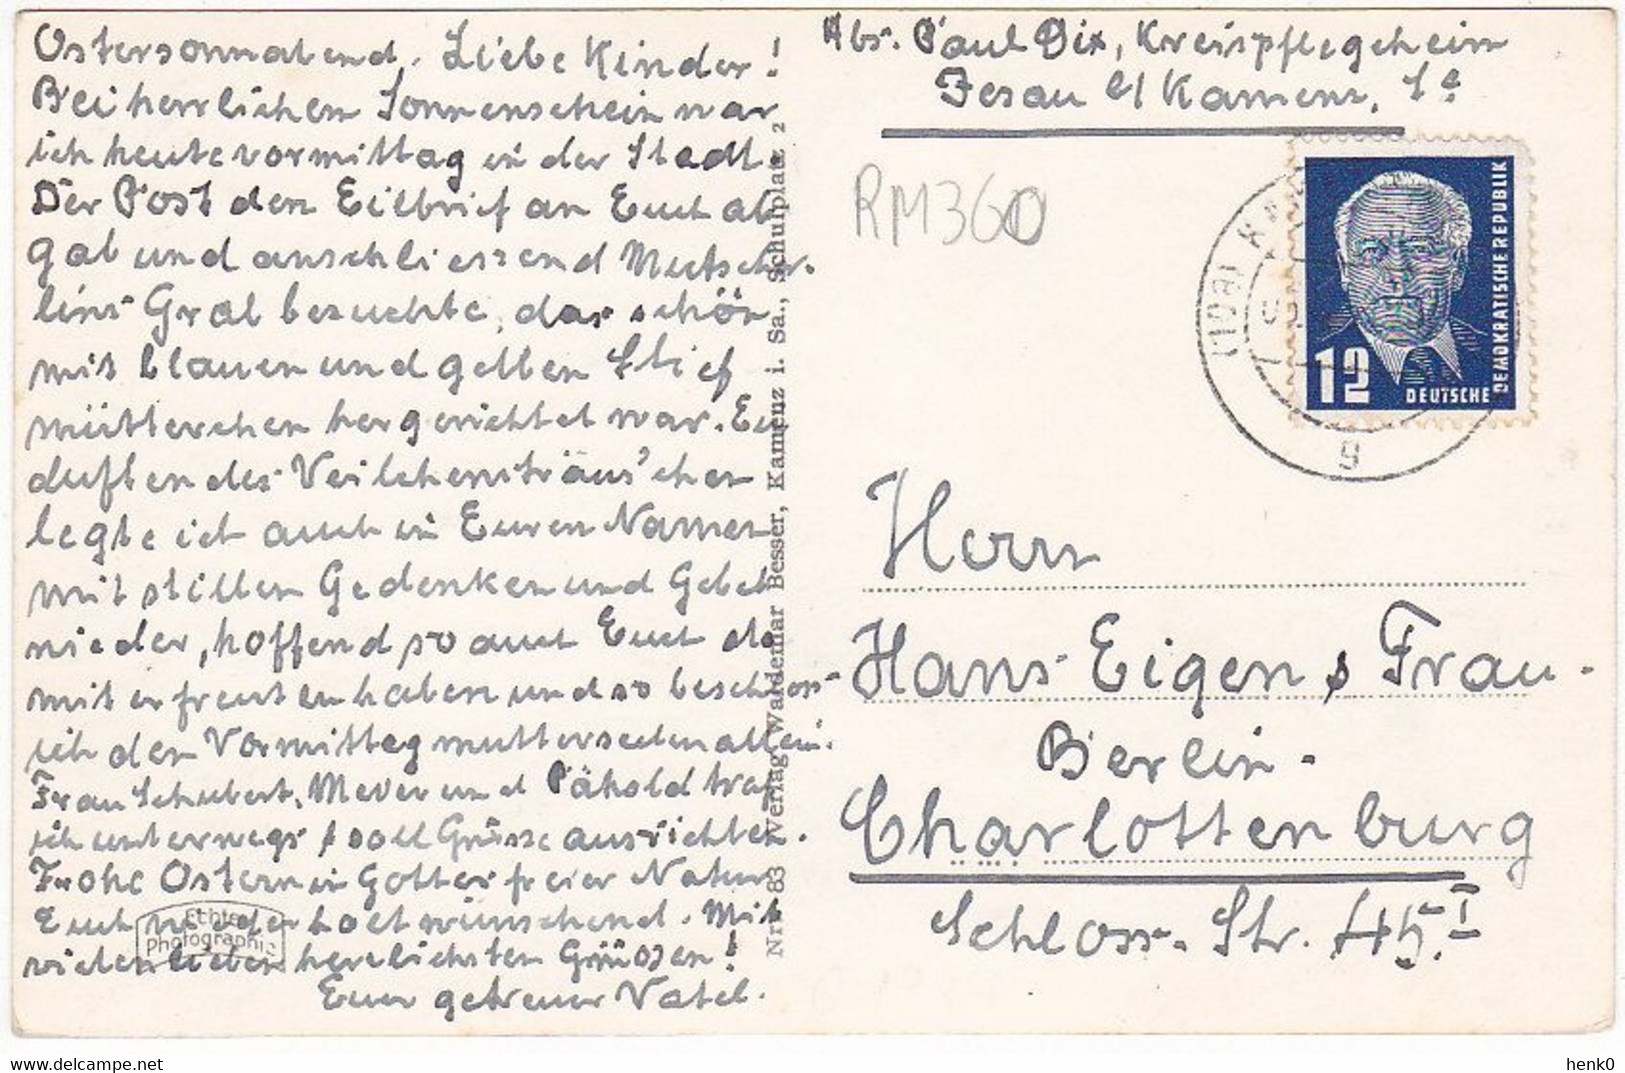 Kamenz Wendische Kirche Postamt AK RM360 - Kamenz